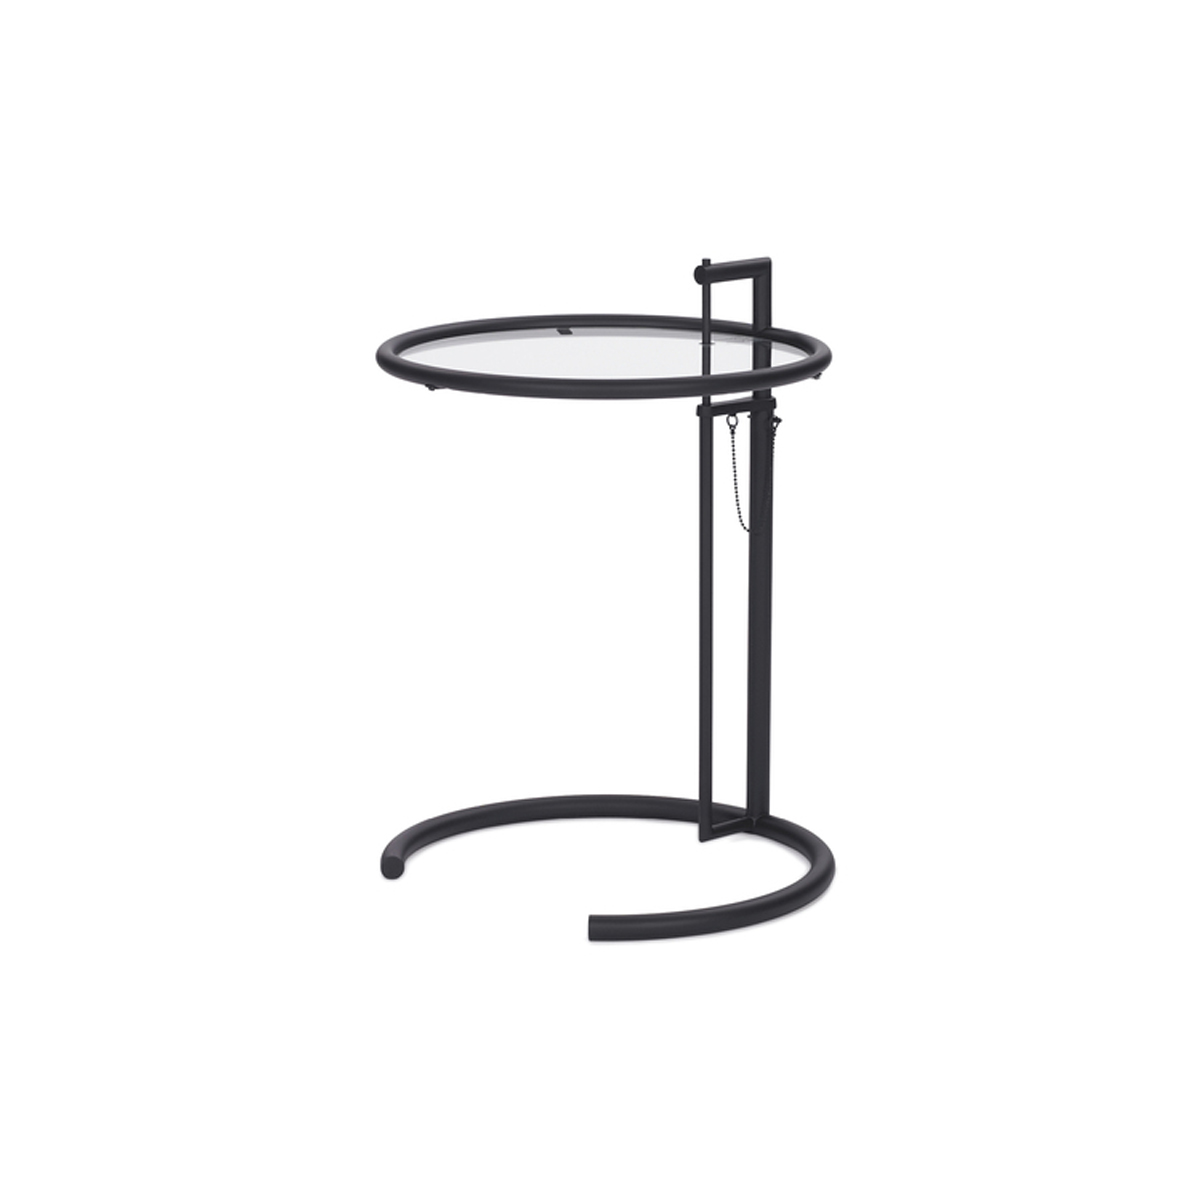 Adjustable Table E 1027 Black Version